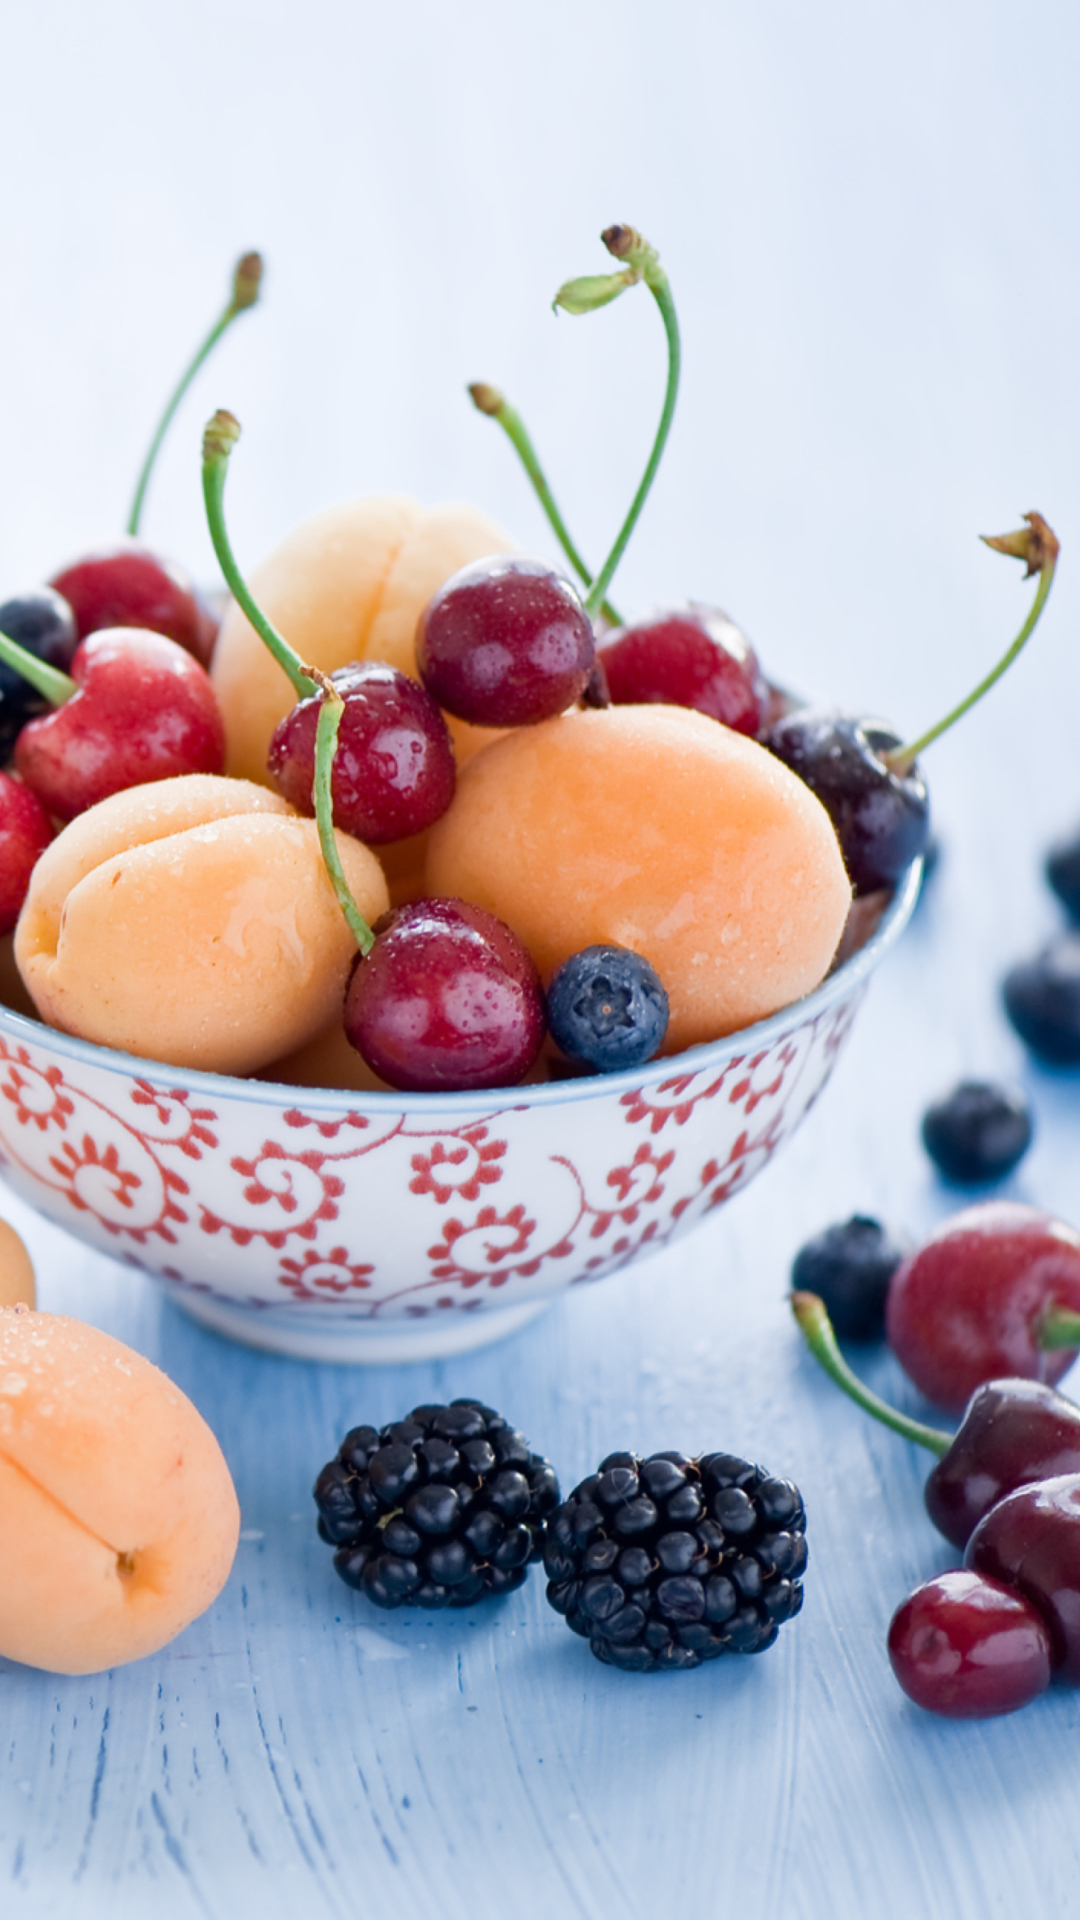 Обои Plate Of Fruits And Berries 1080x1920